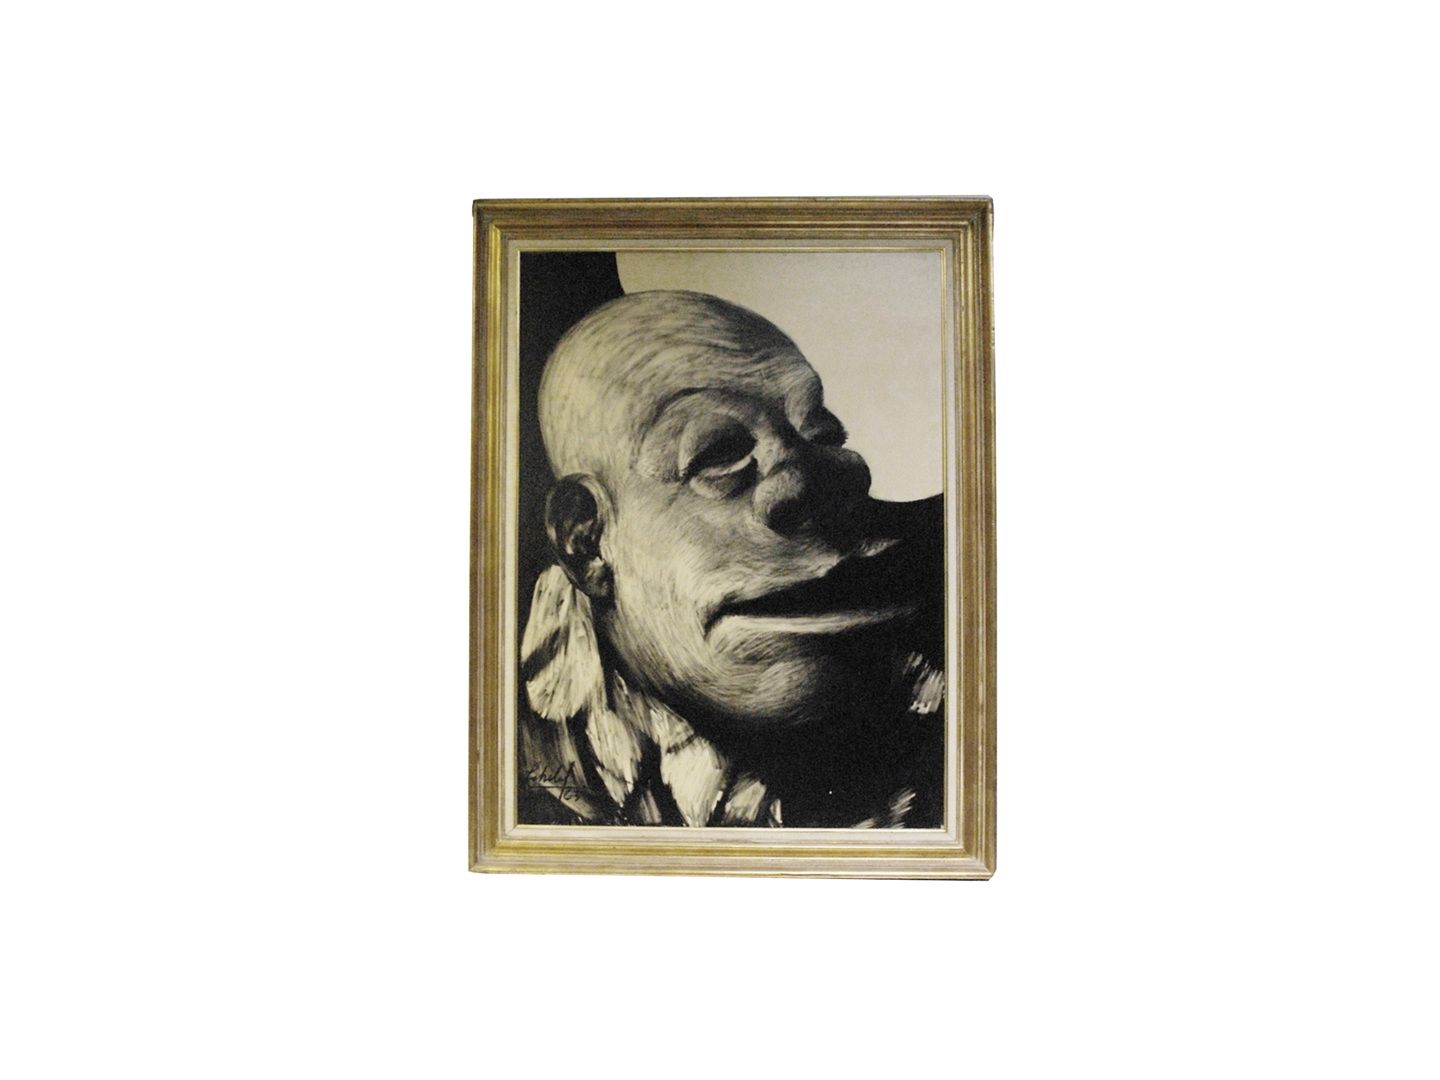 Null 签名为Maurice SCHELCK [1906-1987]和日期为63的油画《老人》尺寸为122 x 90厘米。